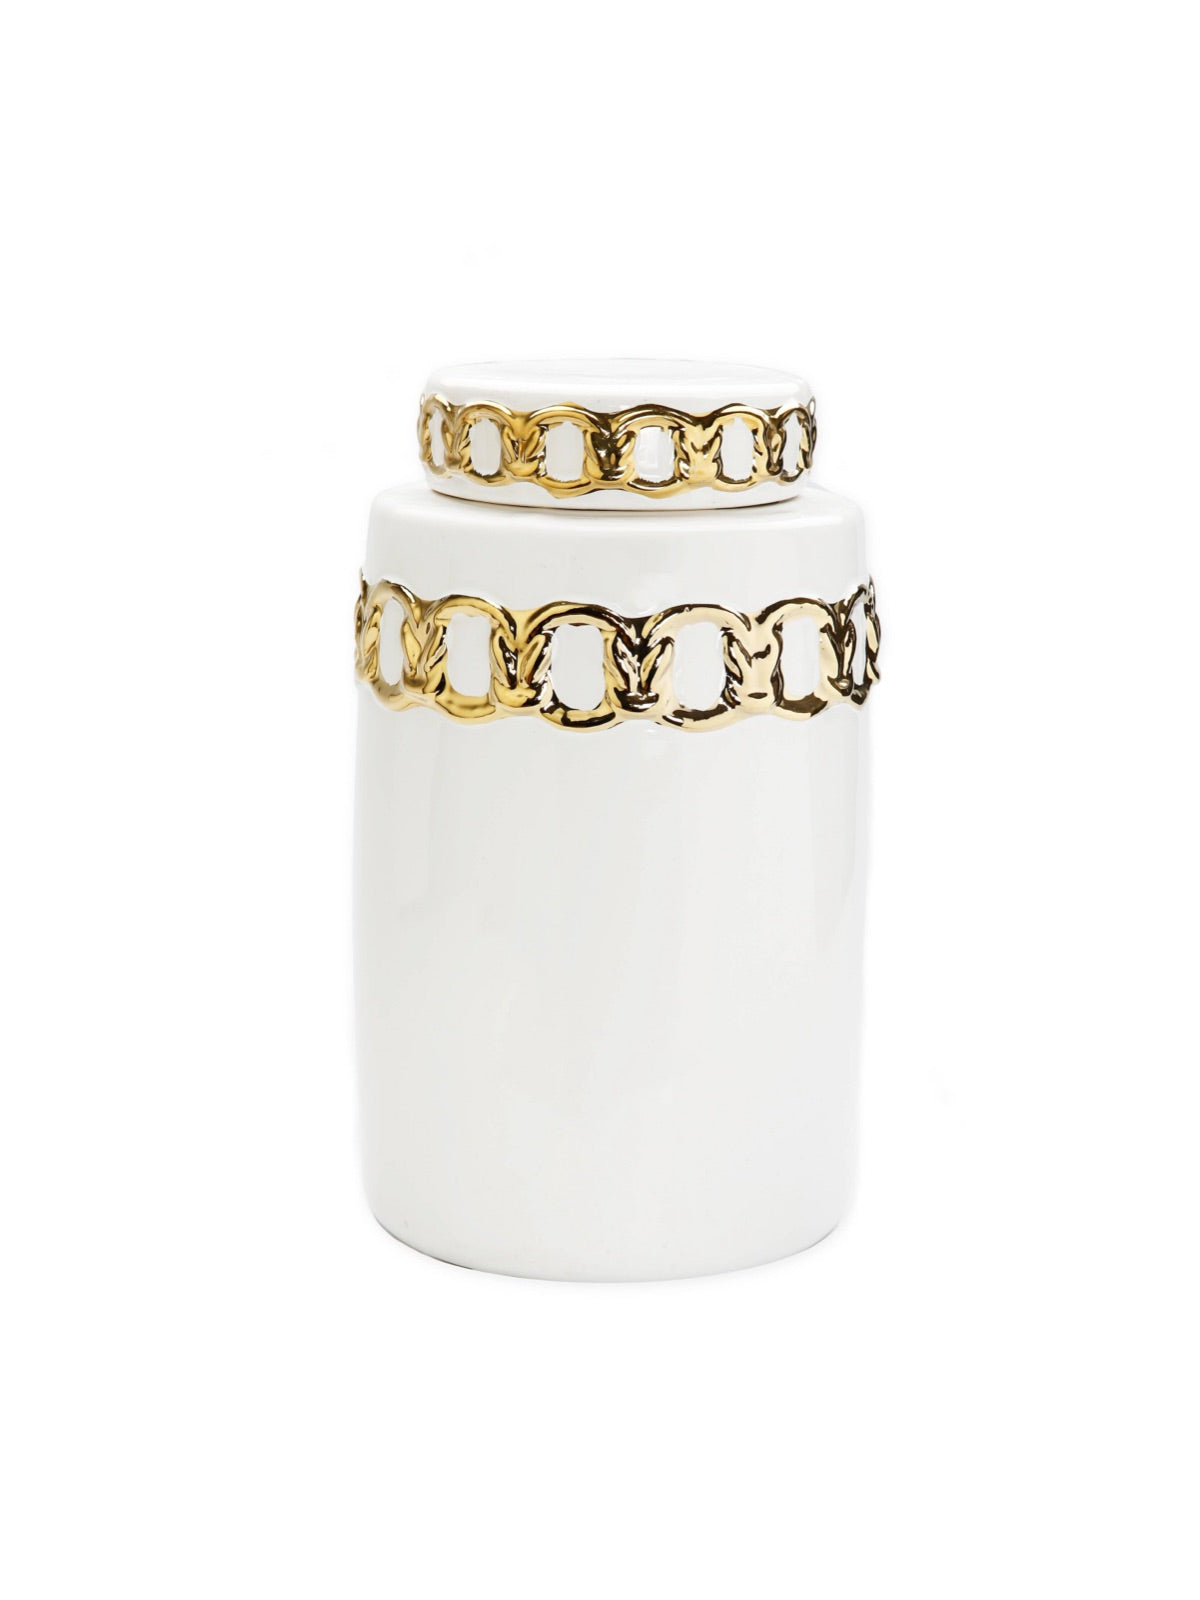 Large White Ceramic Kitchen Jar with Luxury Gold Chain Details - KYA Home Decor